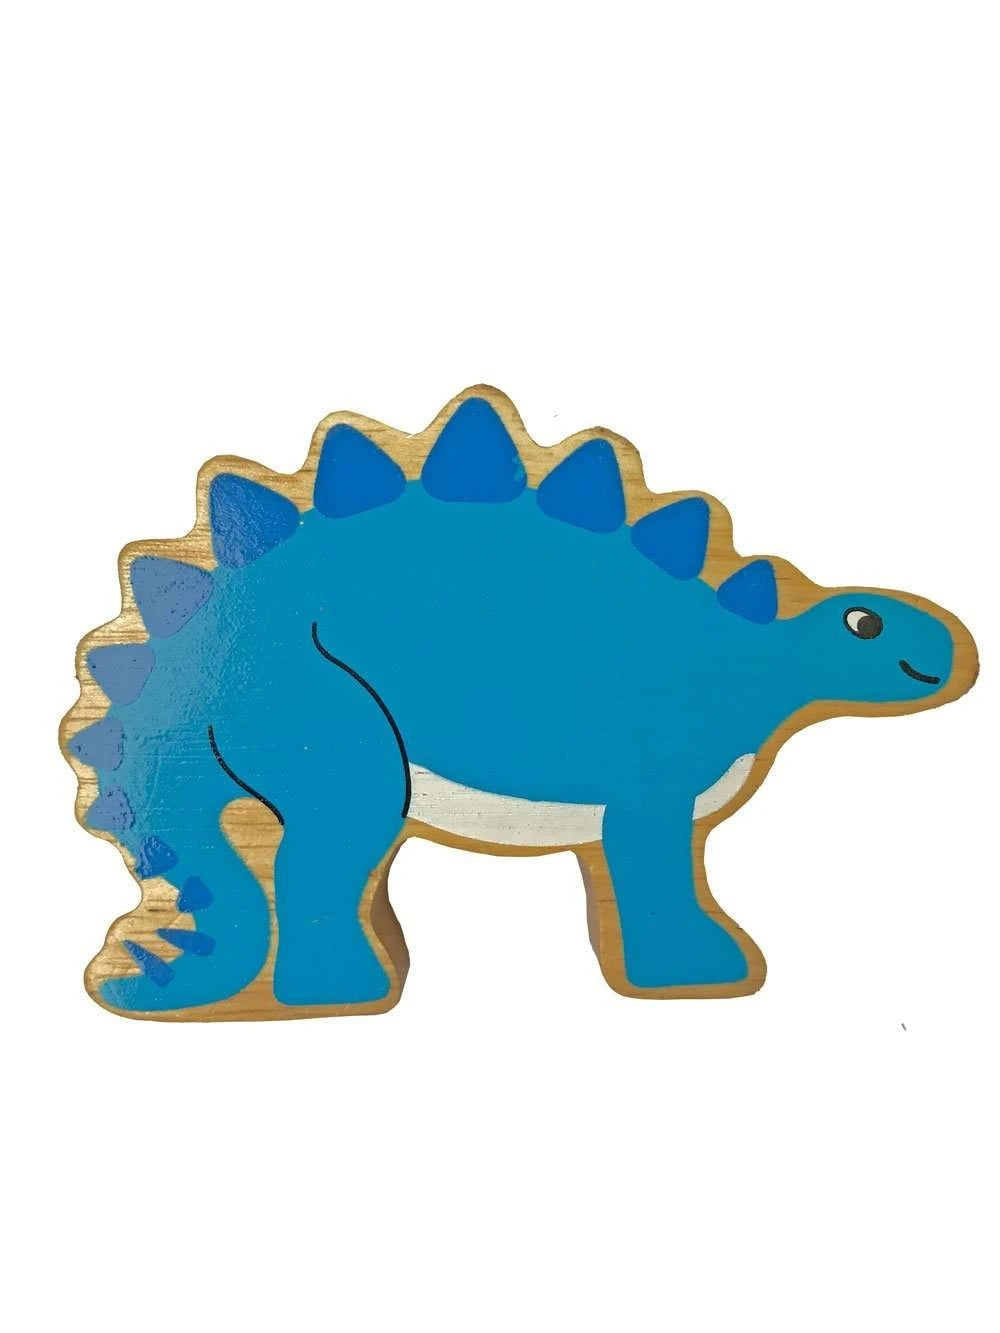 Lanka Kade Wooden Fair Trade Toy -  Blue Stegosaurus